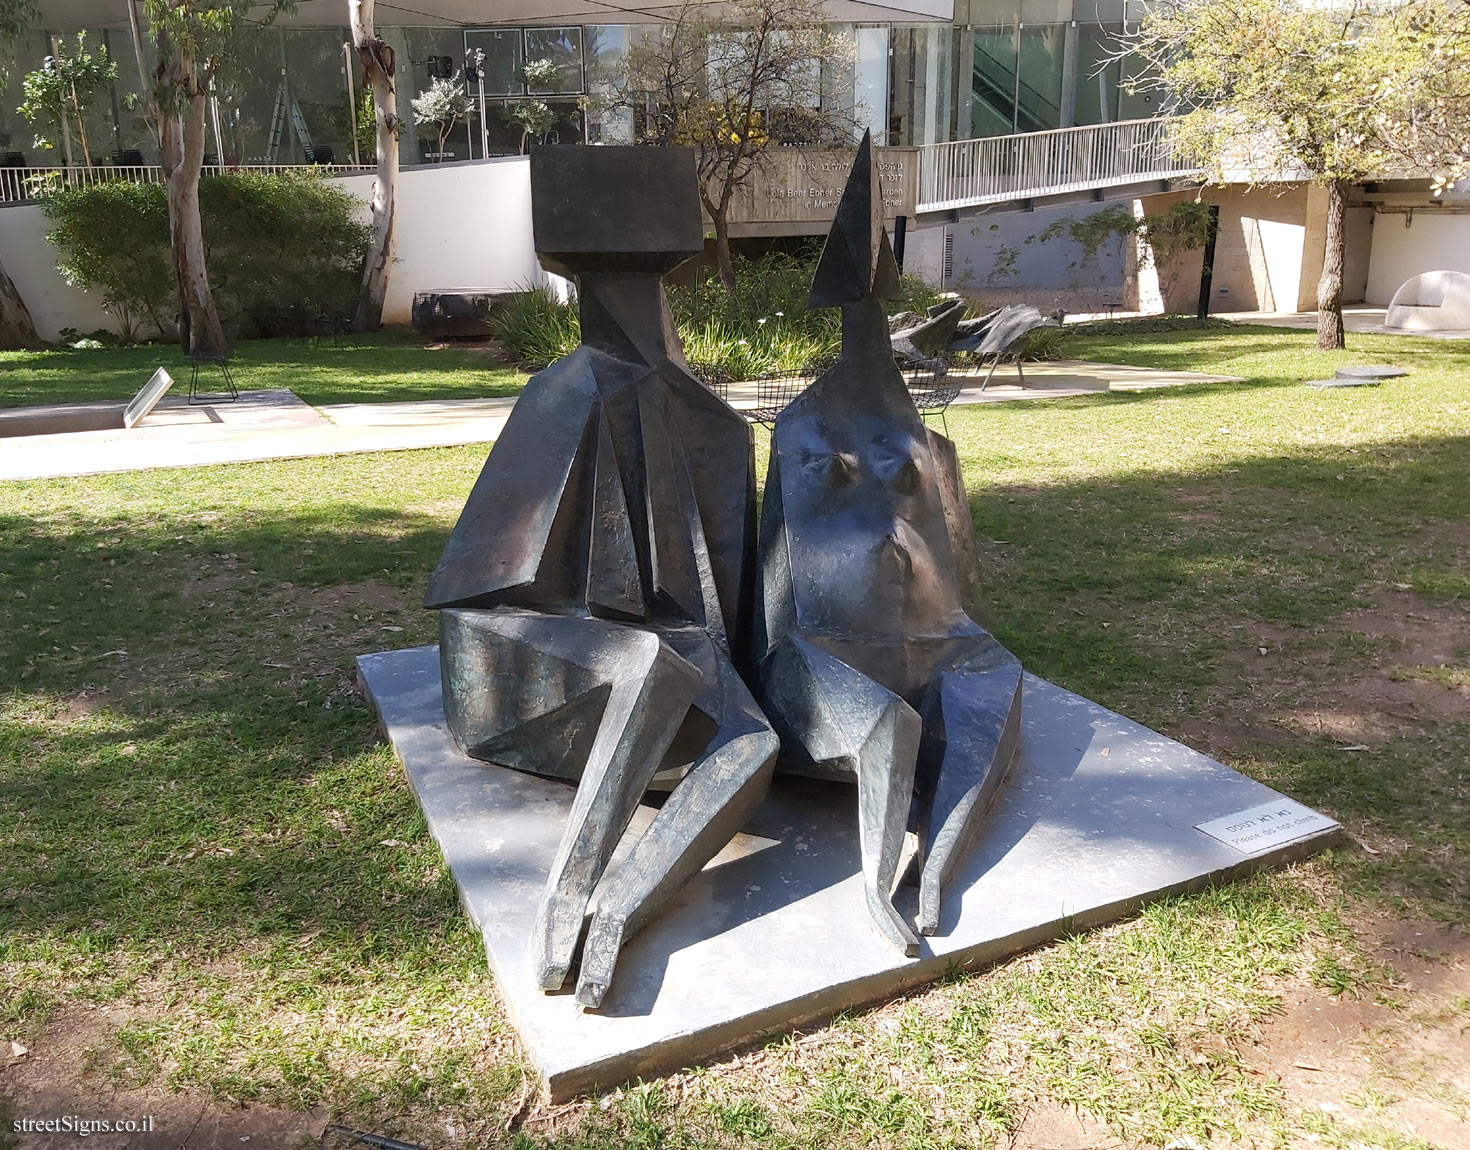 Tel Aviv - Lola Beer Ebner Sculpture Garden - "Two Seated Figures" outdoor sculpture by Lynn Chadwick - Tel Aviv Museum